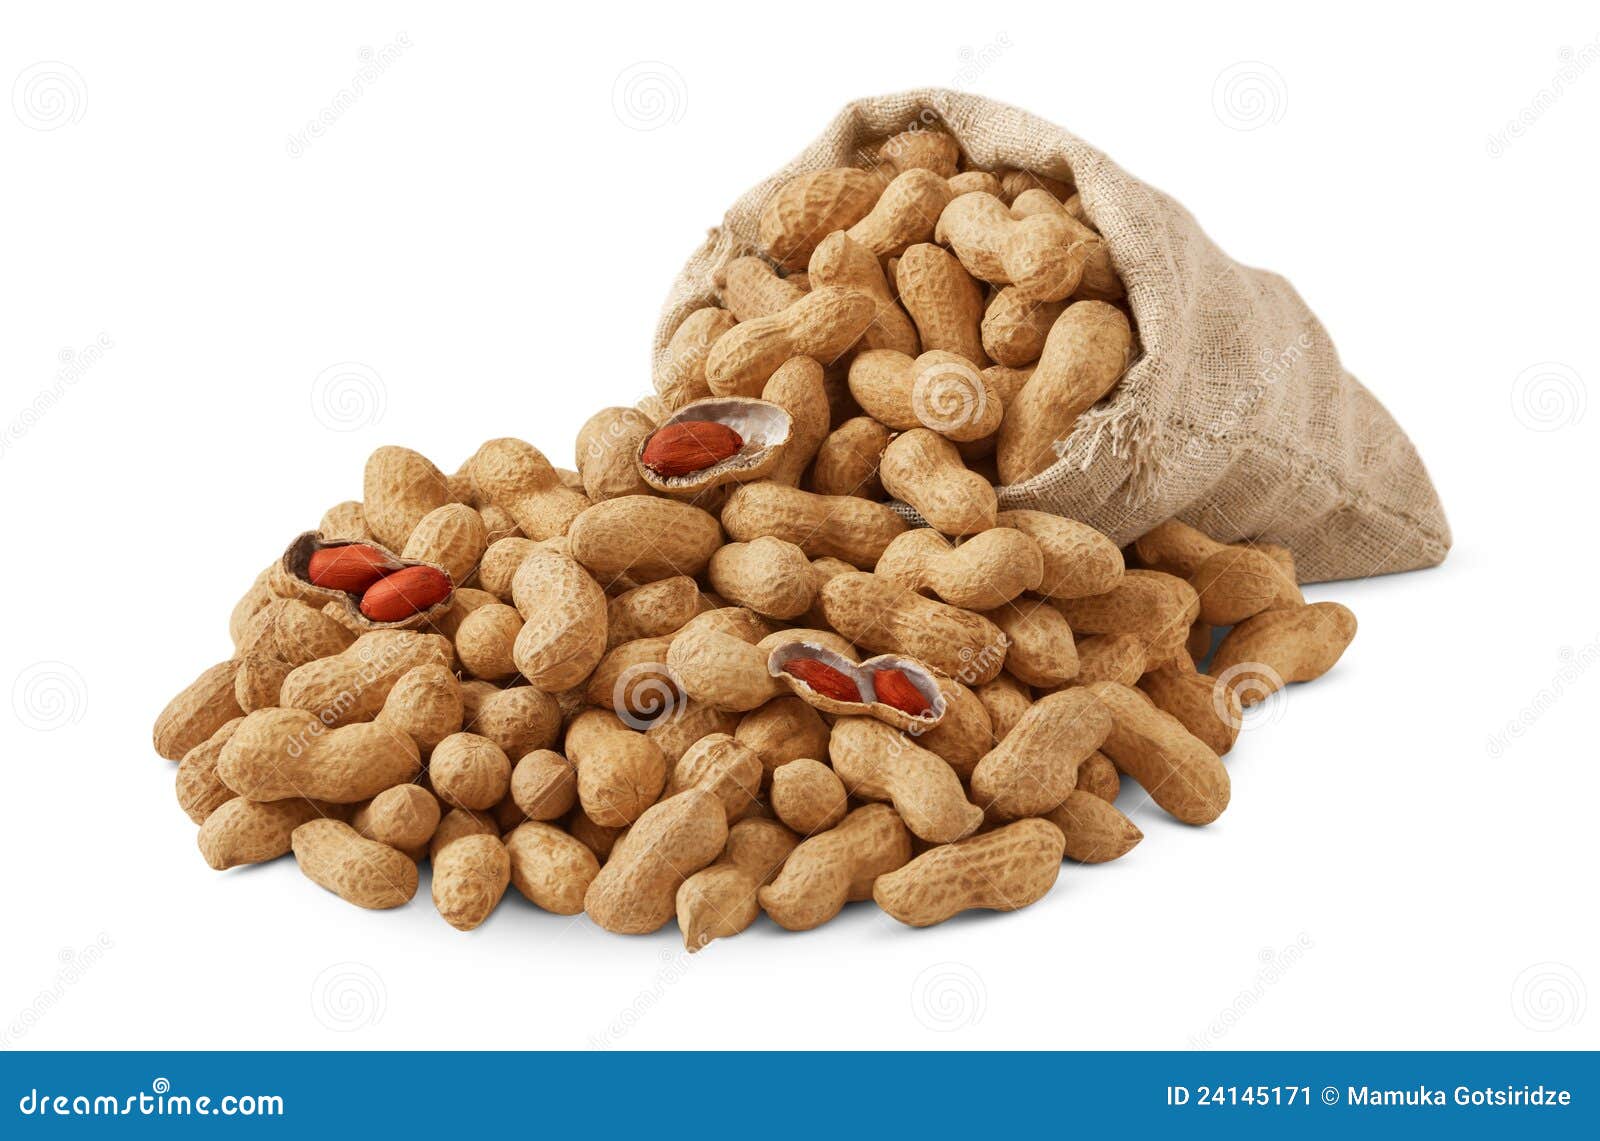 bag of the peanuts